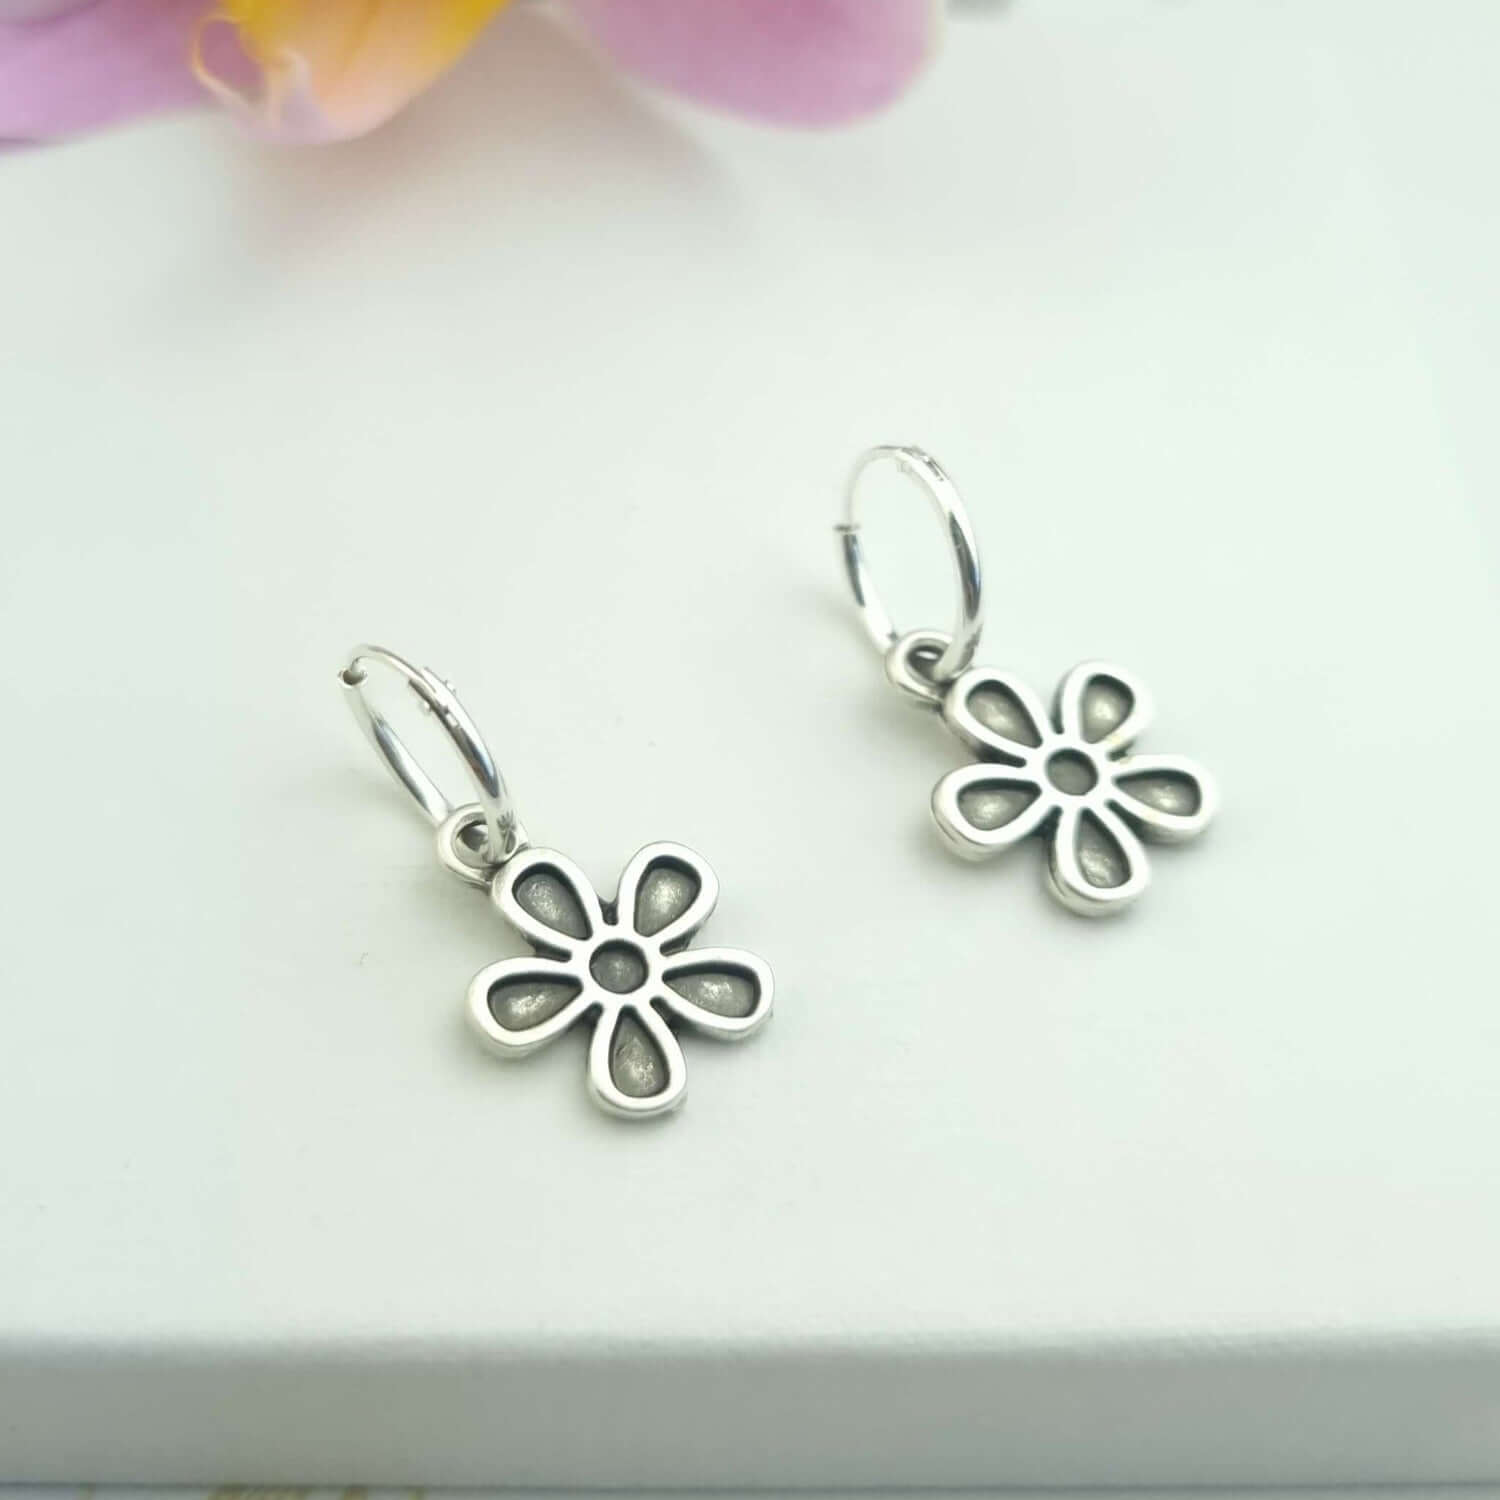 Small boho daisy earrings